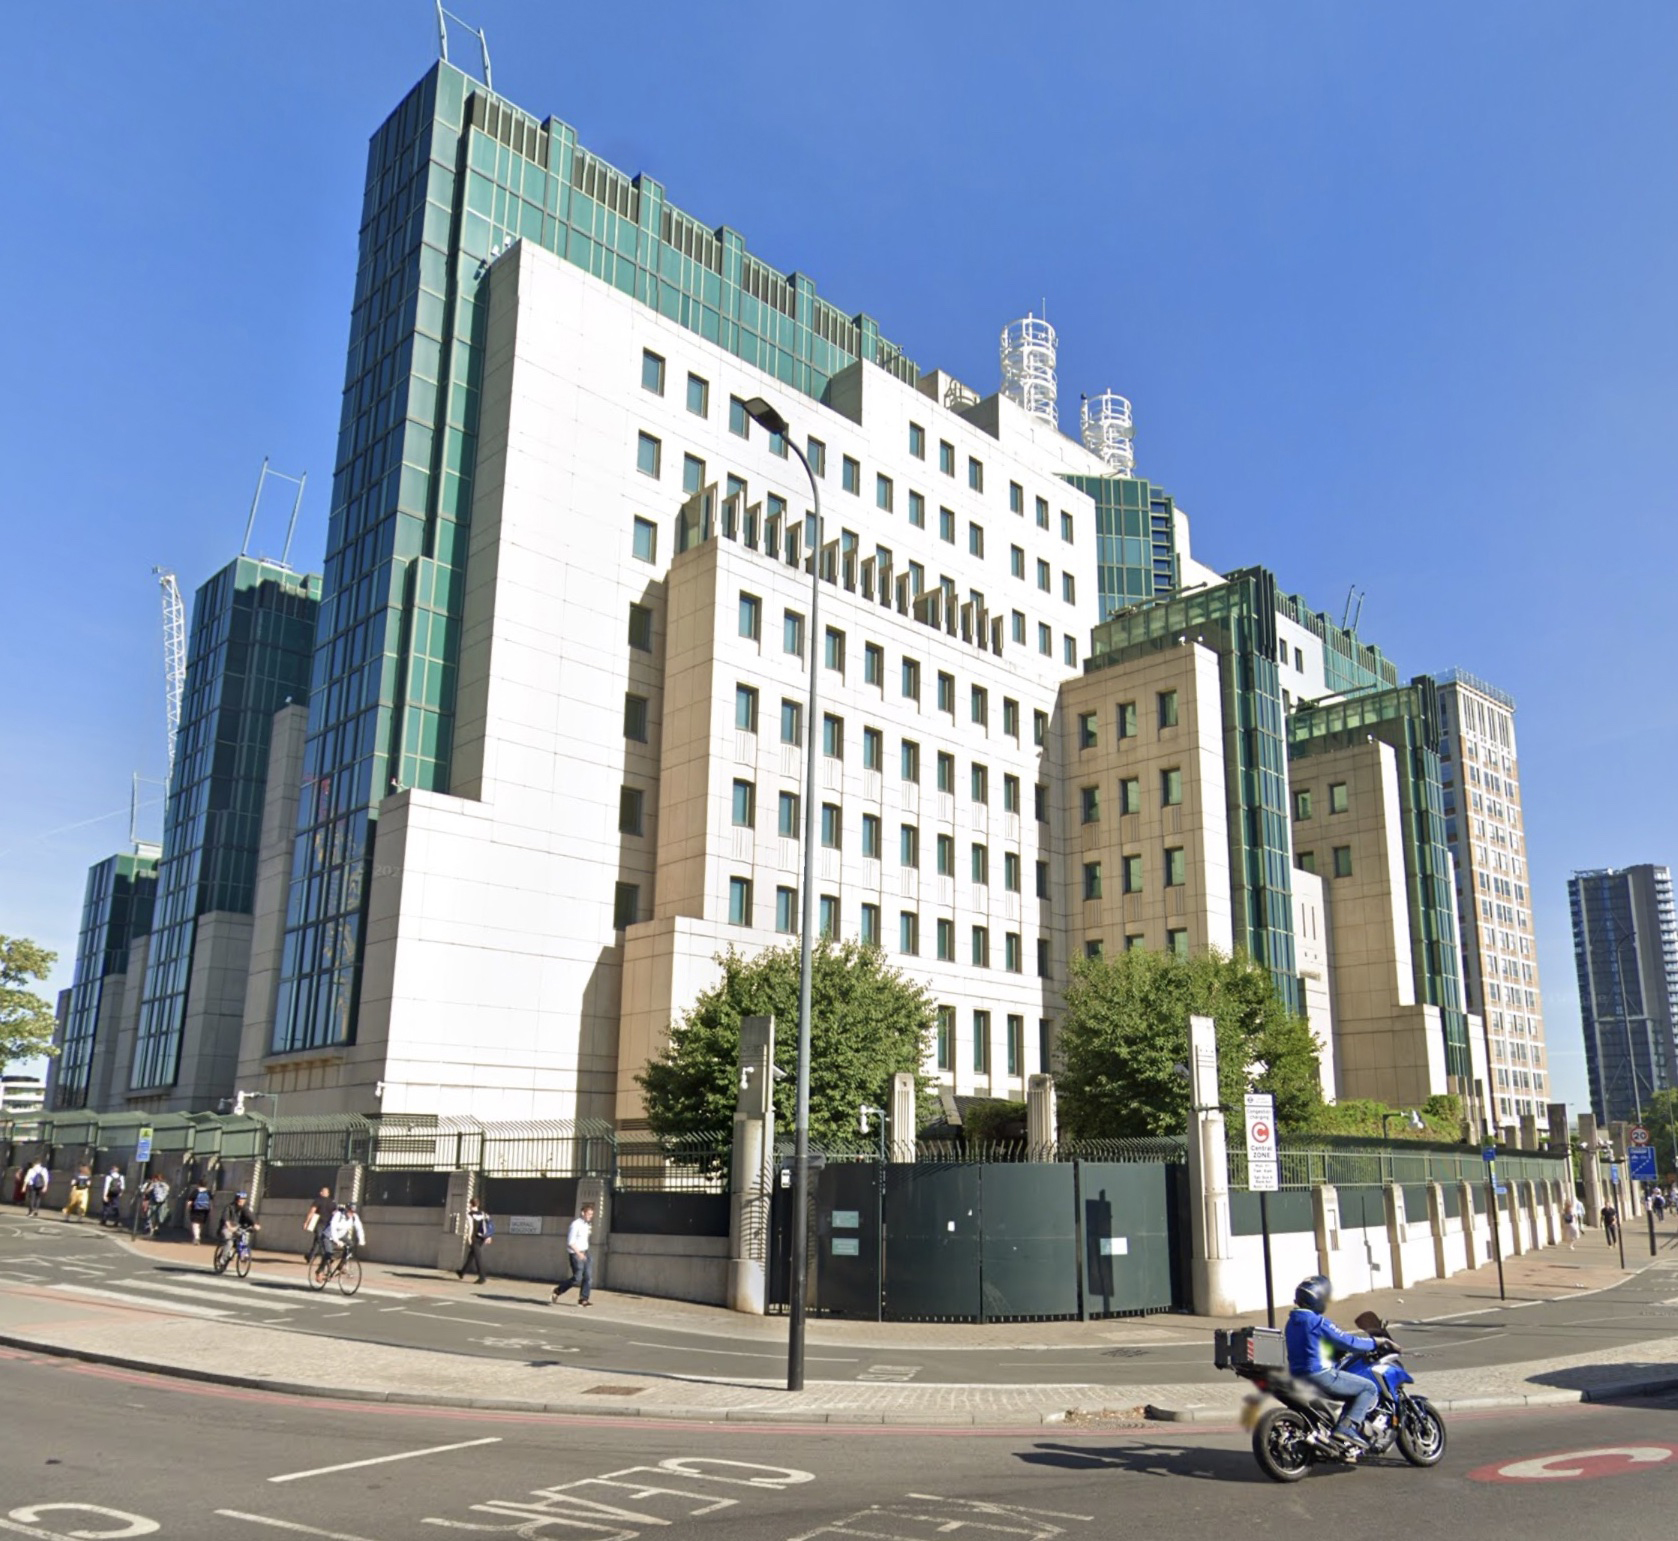 MI6 headquarters in Vauxhall, south London.